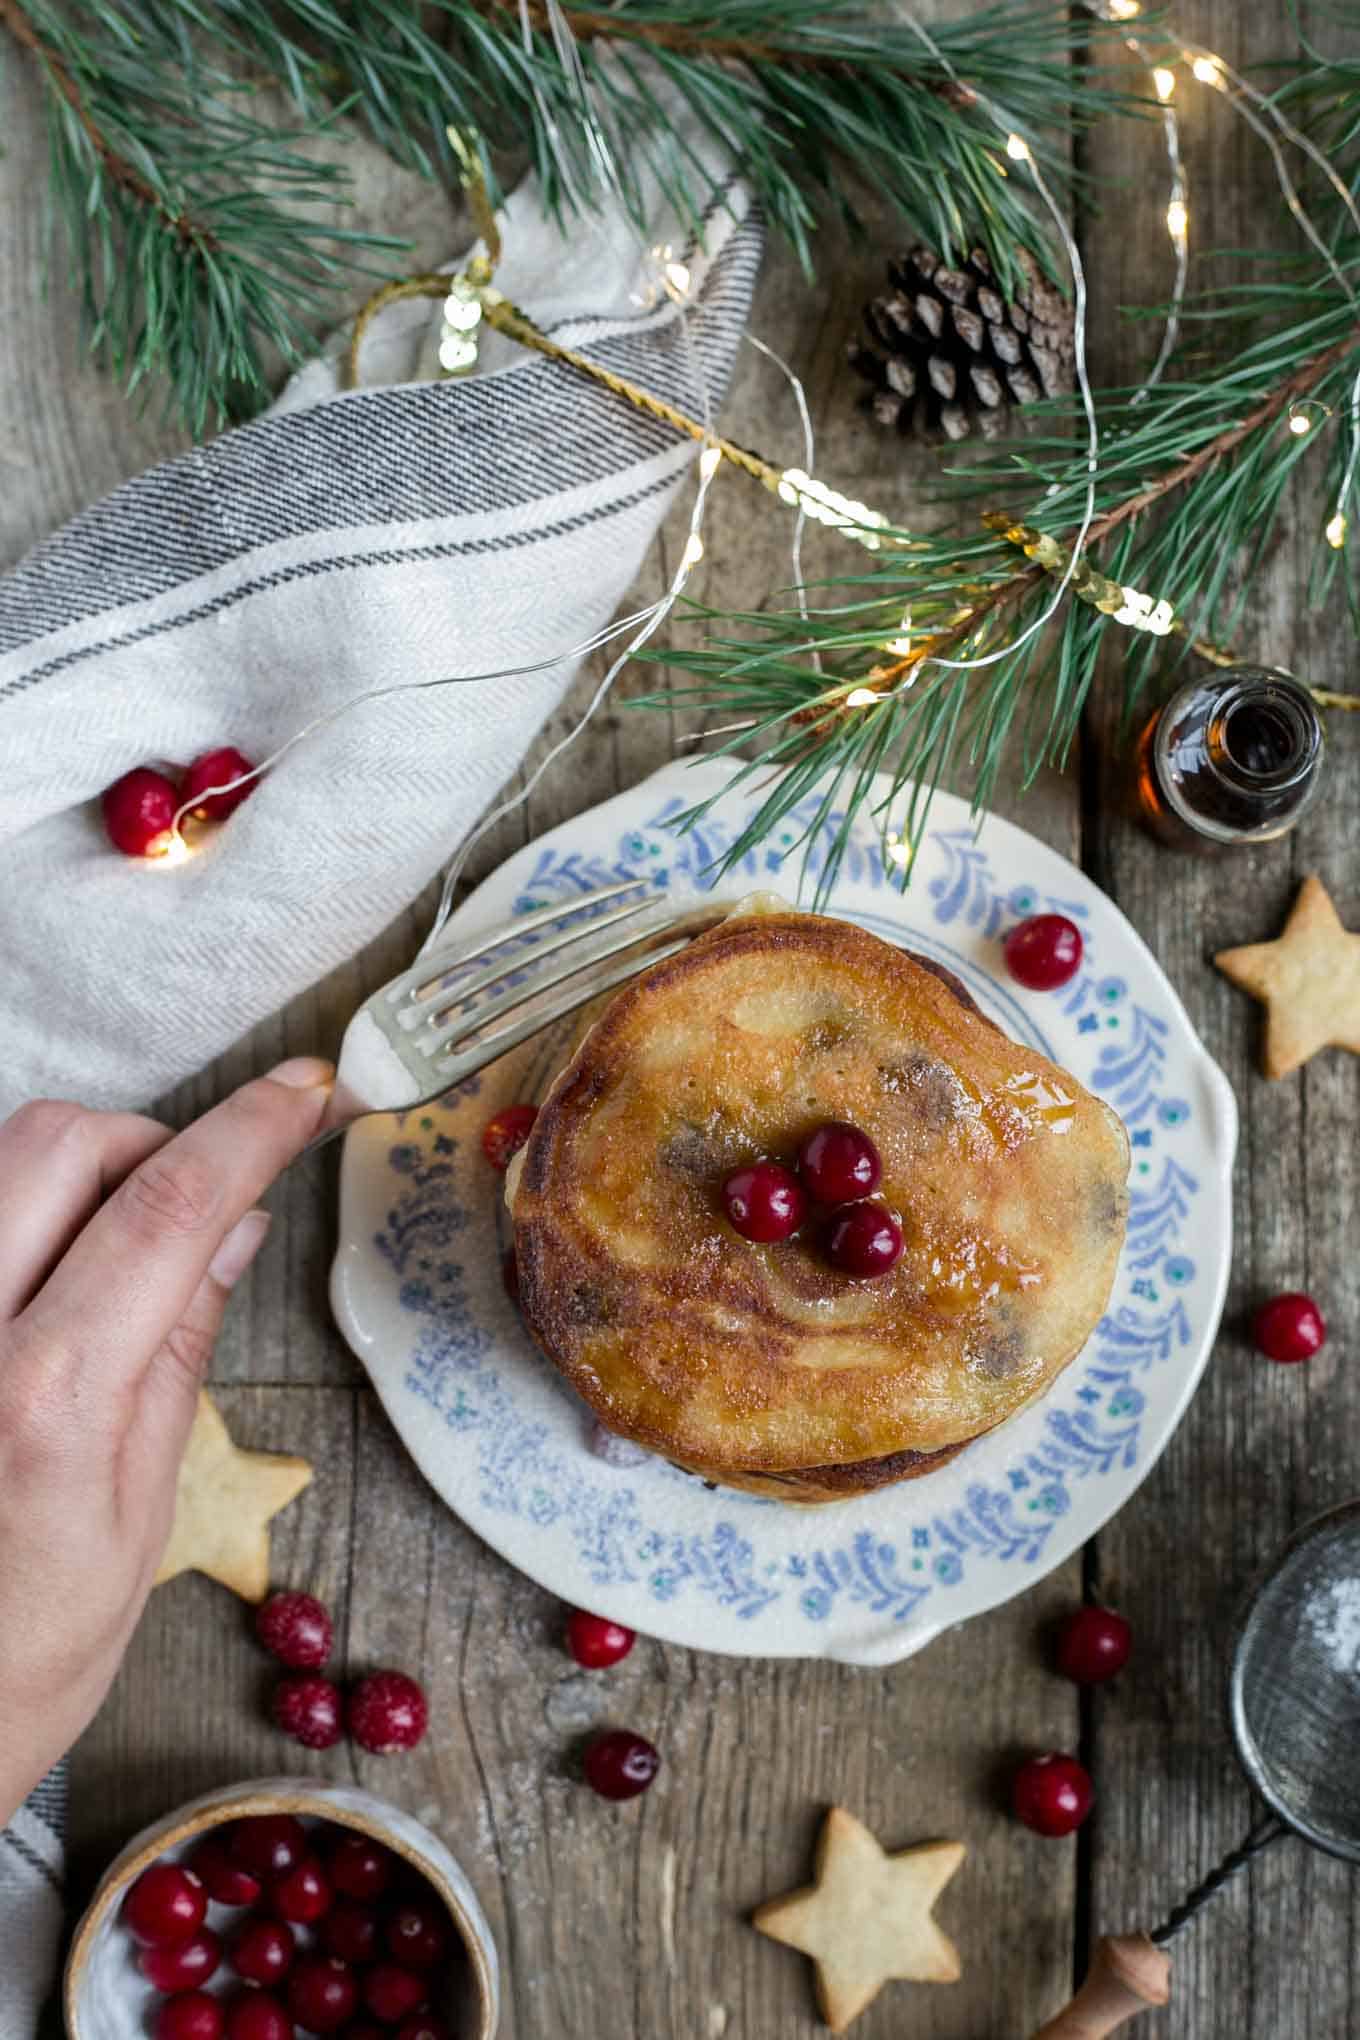 The fluffiest pancakes, stuffed with boozy raisins, perfect #Christmas breakfast or brunch! #vegan #pancakes | via @annabanana.co